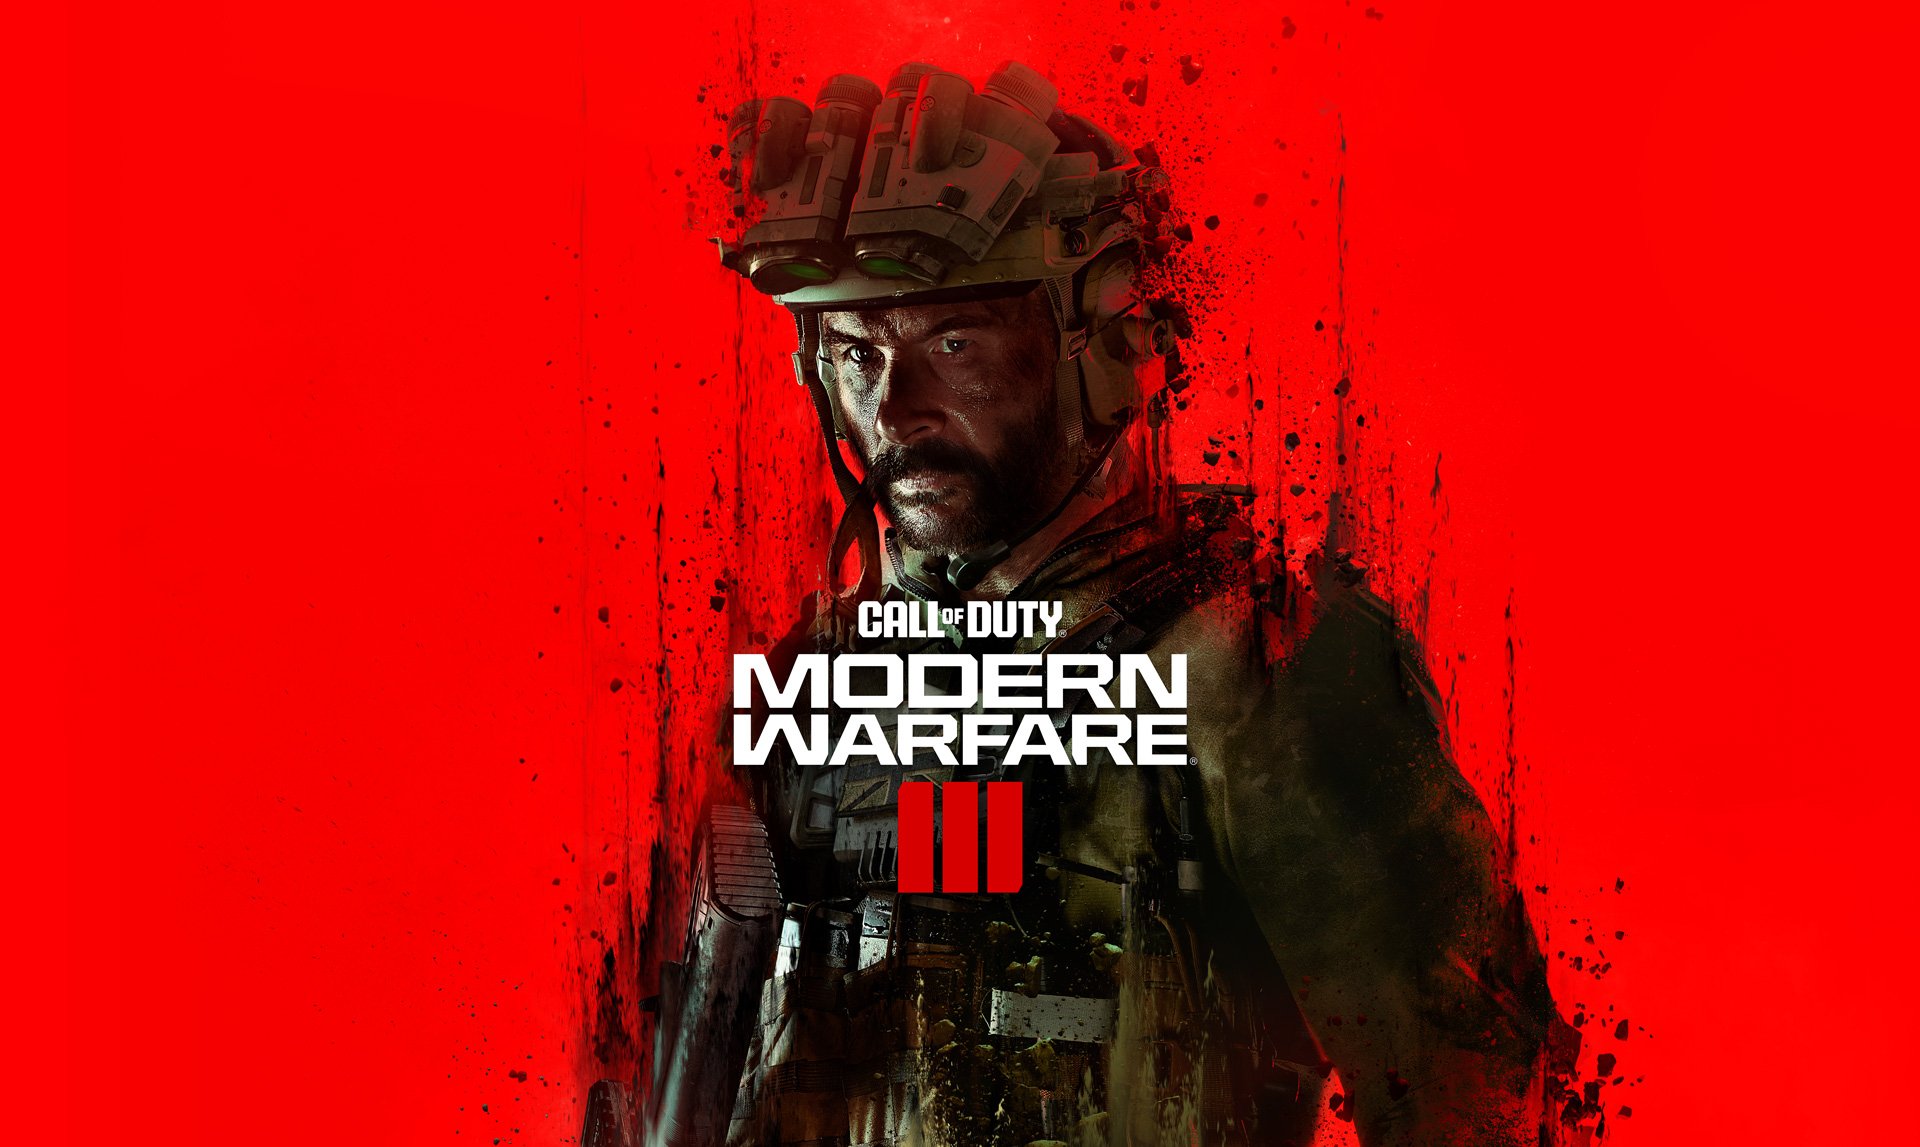 Call of Duty: Modern Warfare III: Activision explica o tamanho